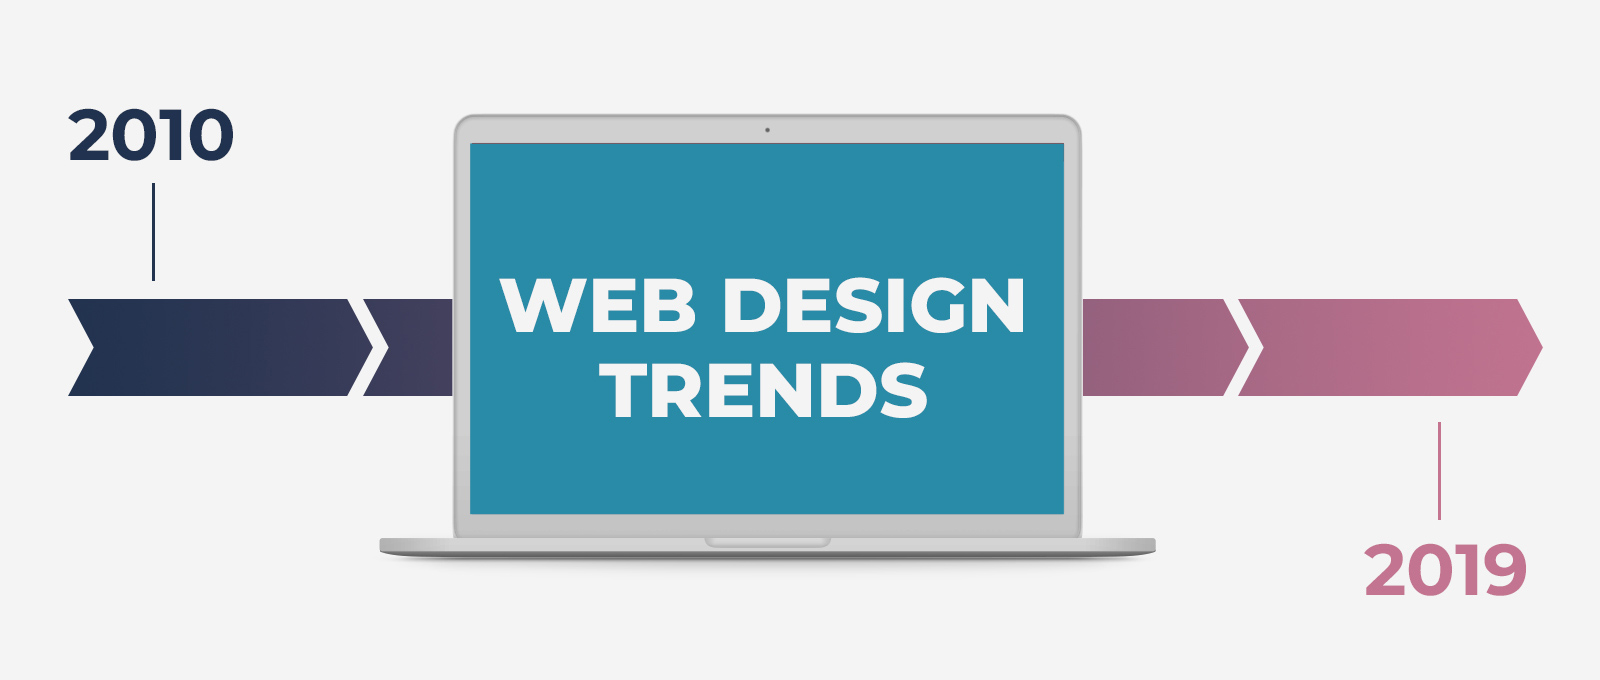 Web Design Trends 2010-2019